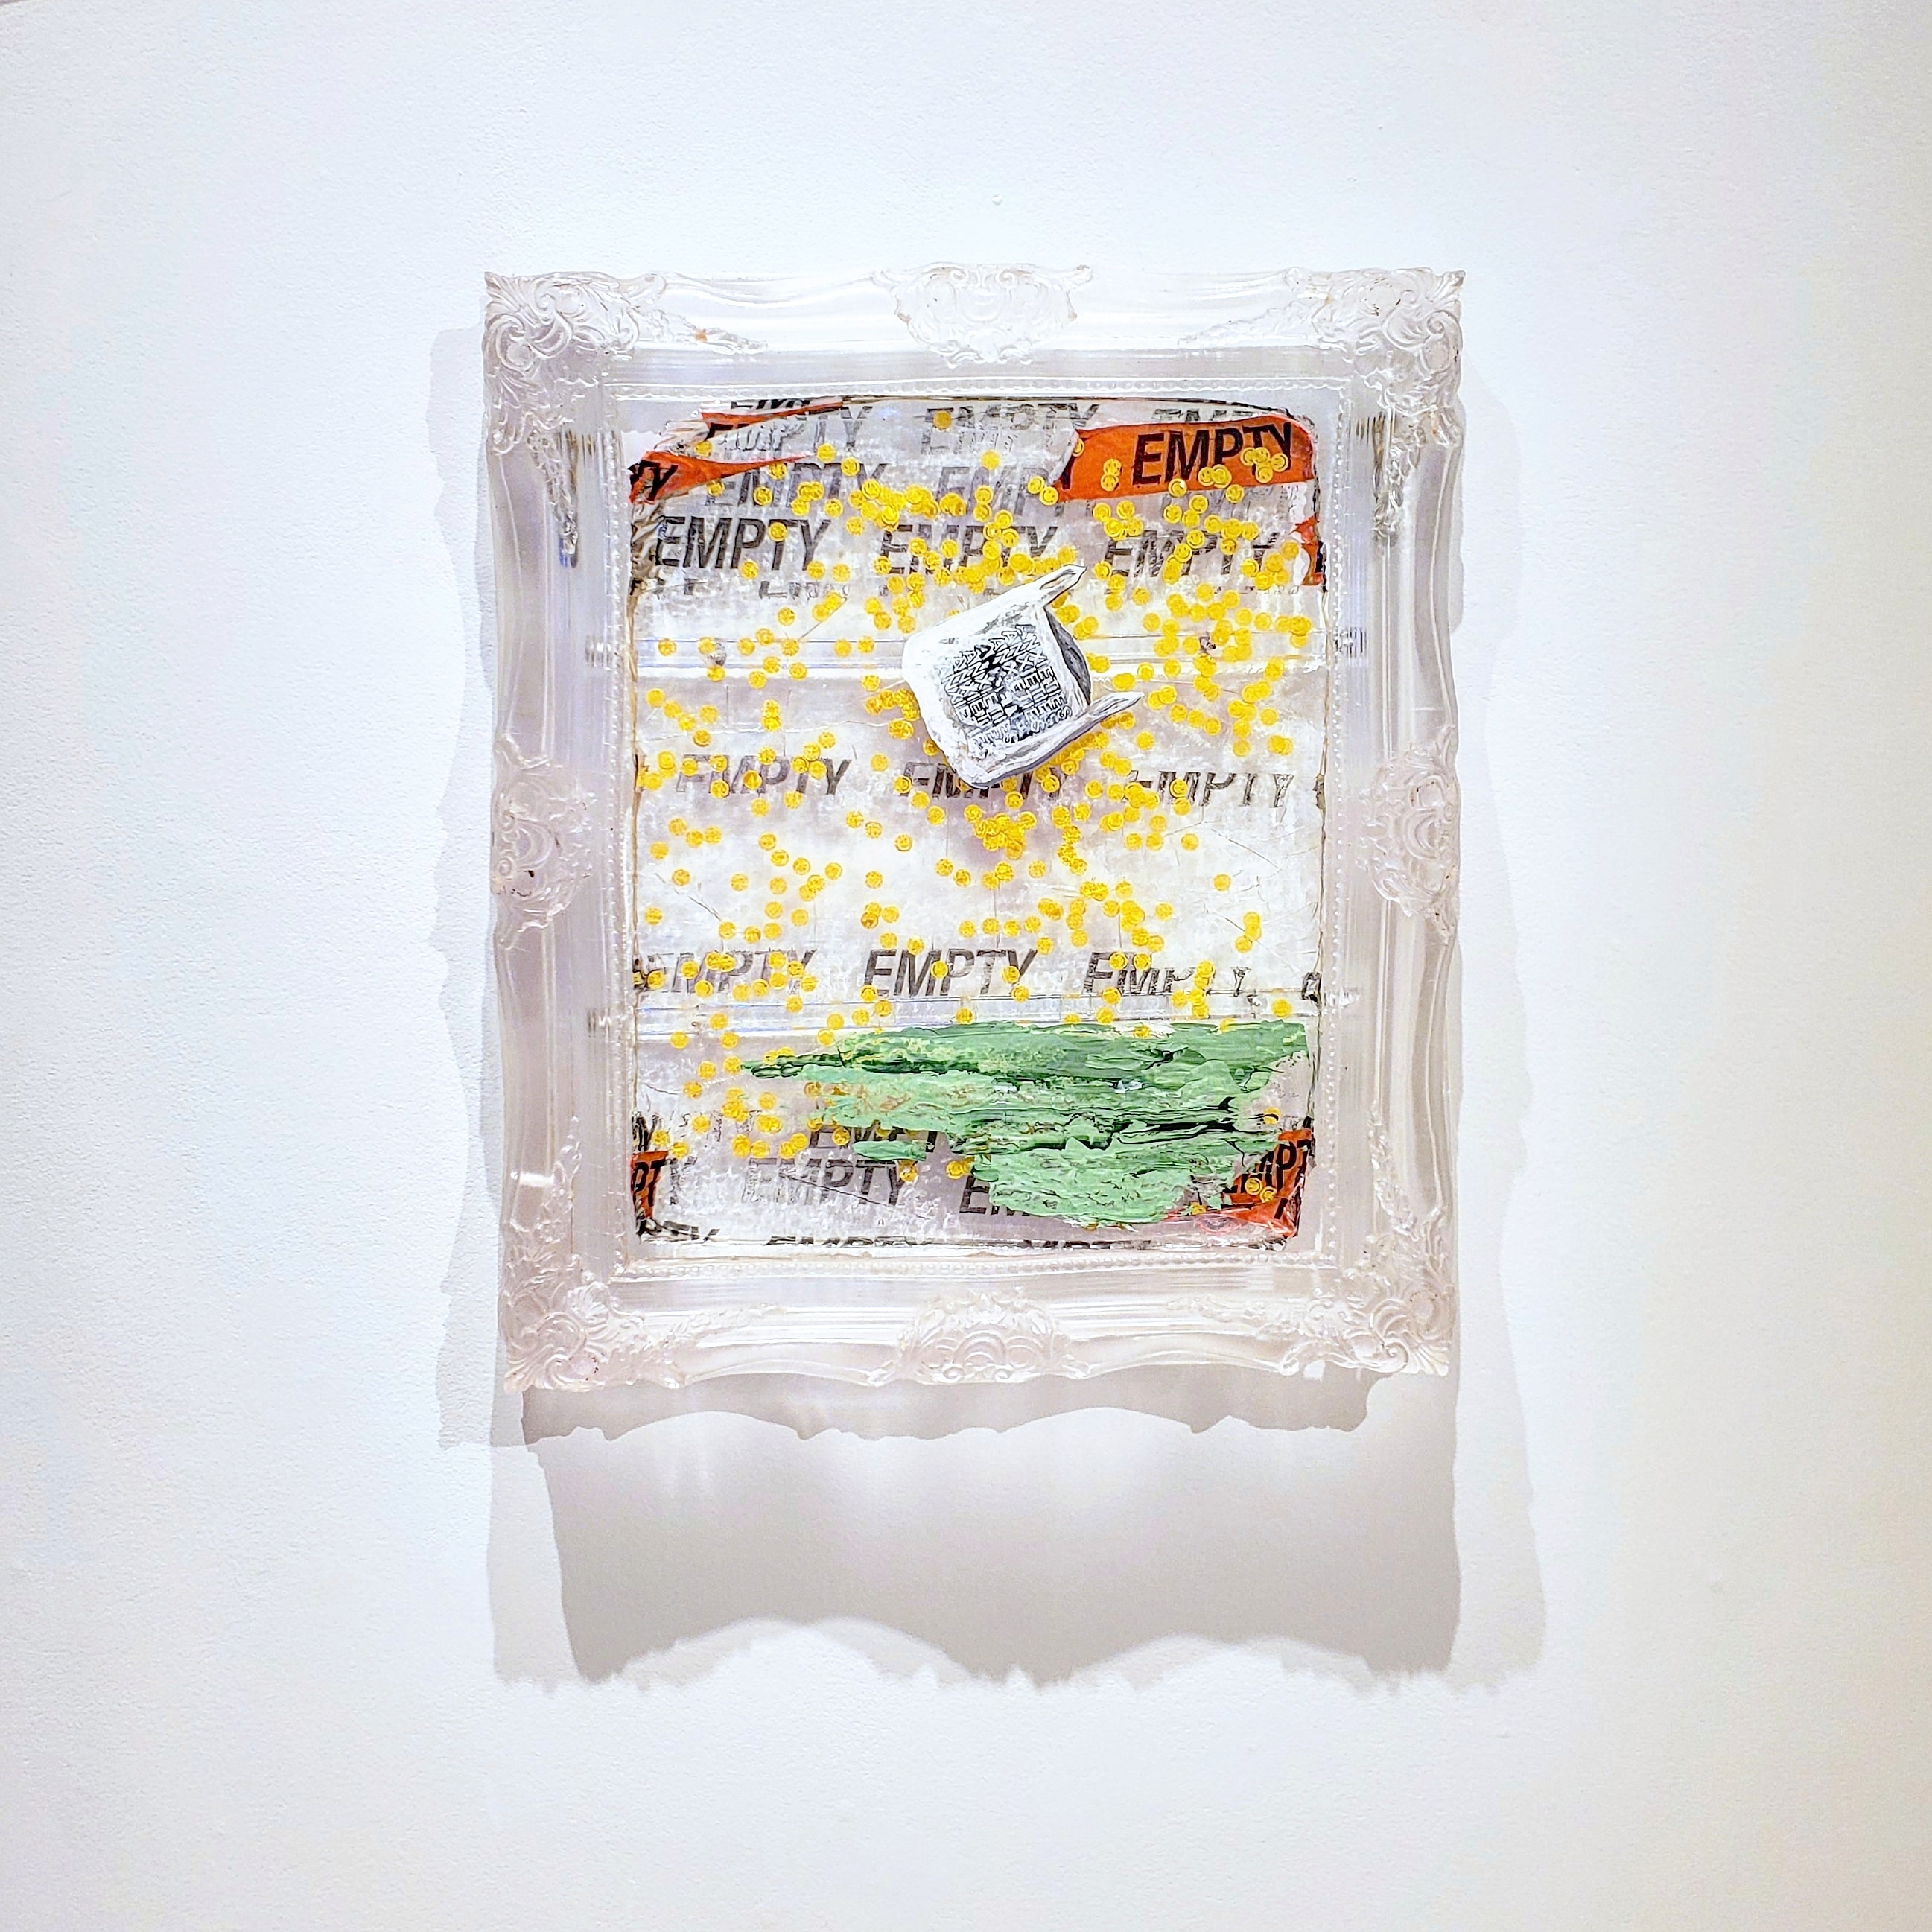 “False Hopes of a pessimistic dreamer” acrylic on resin with confetti and tape, 2019 24” x 32”